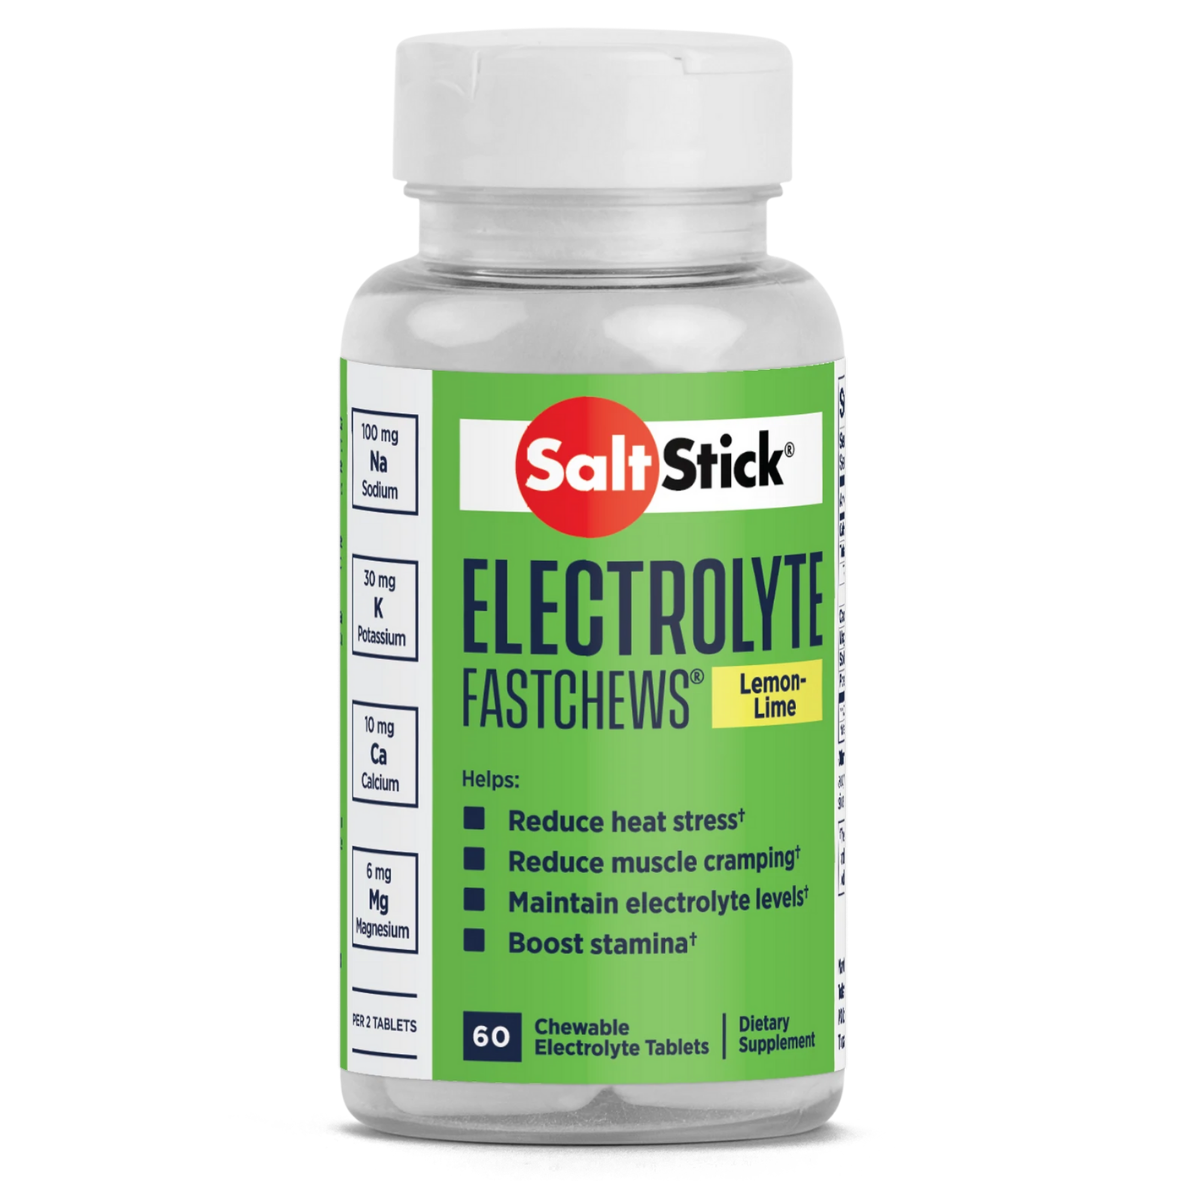 SaltStick Lemon-Lime Electrolyte FastChews